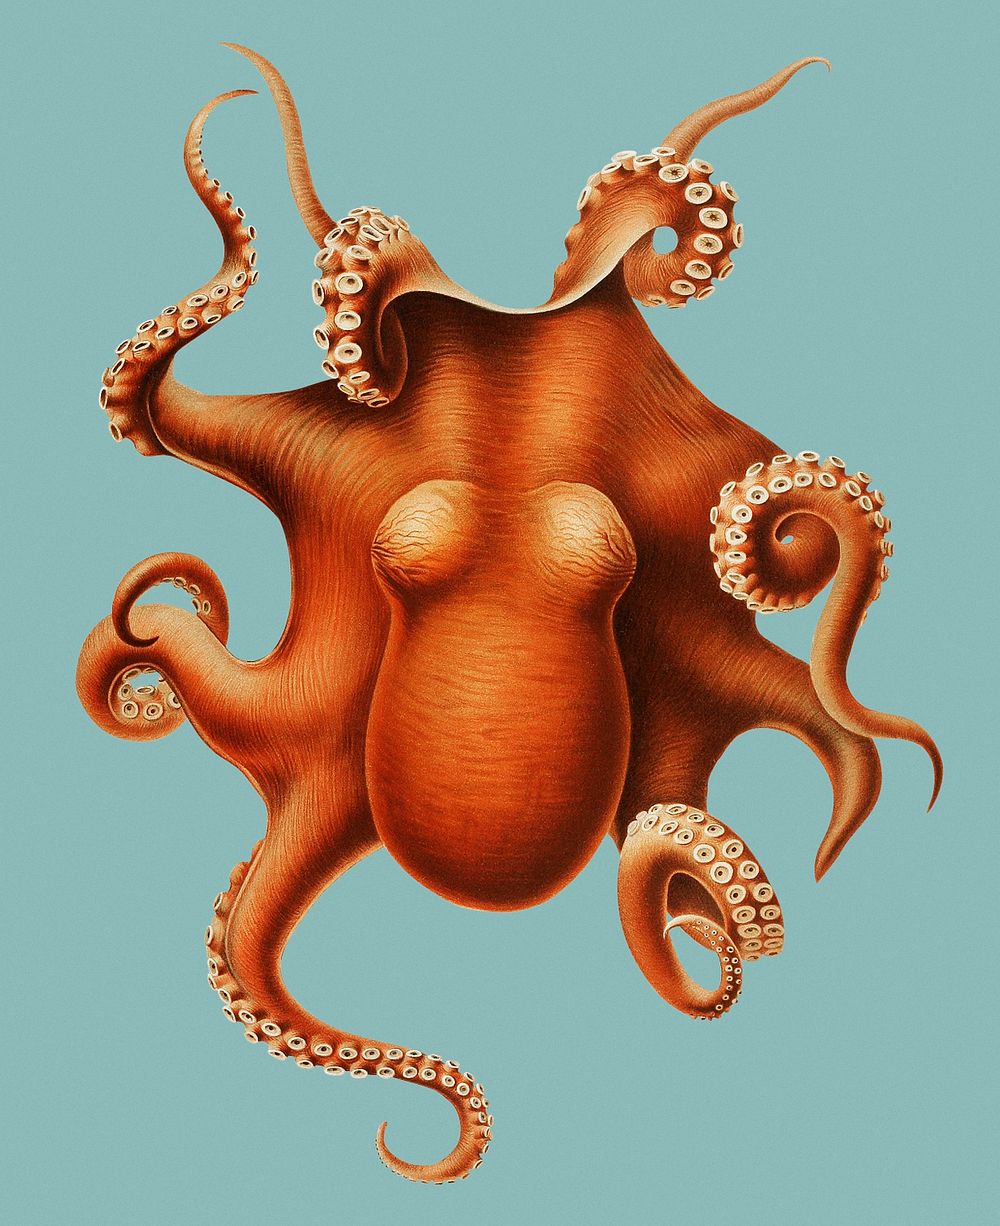 Vintage colored octopus illustration